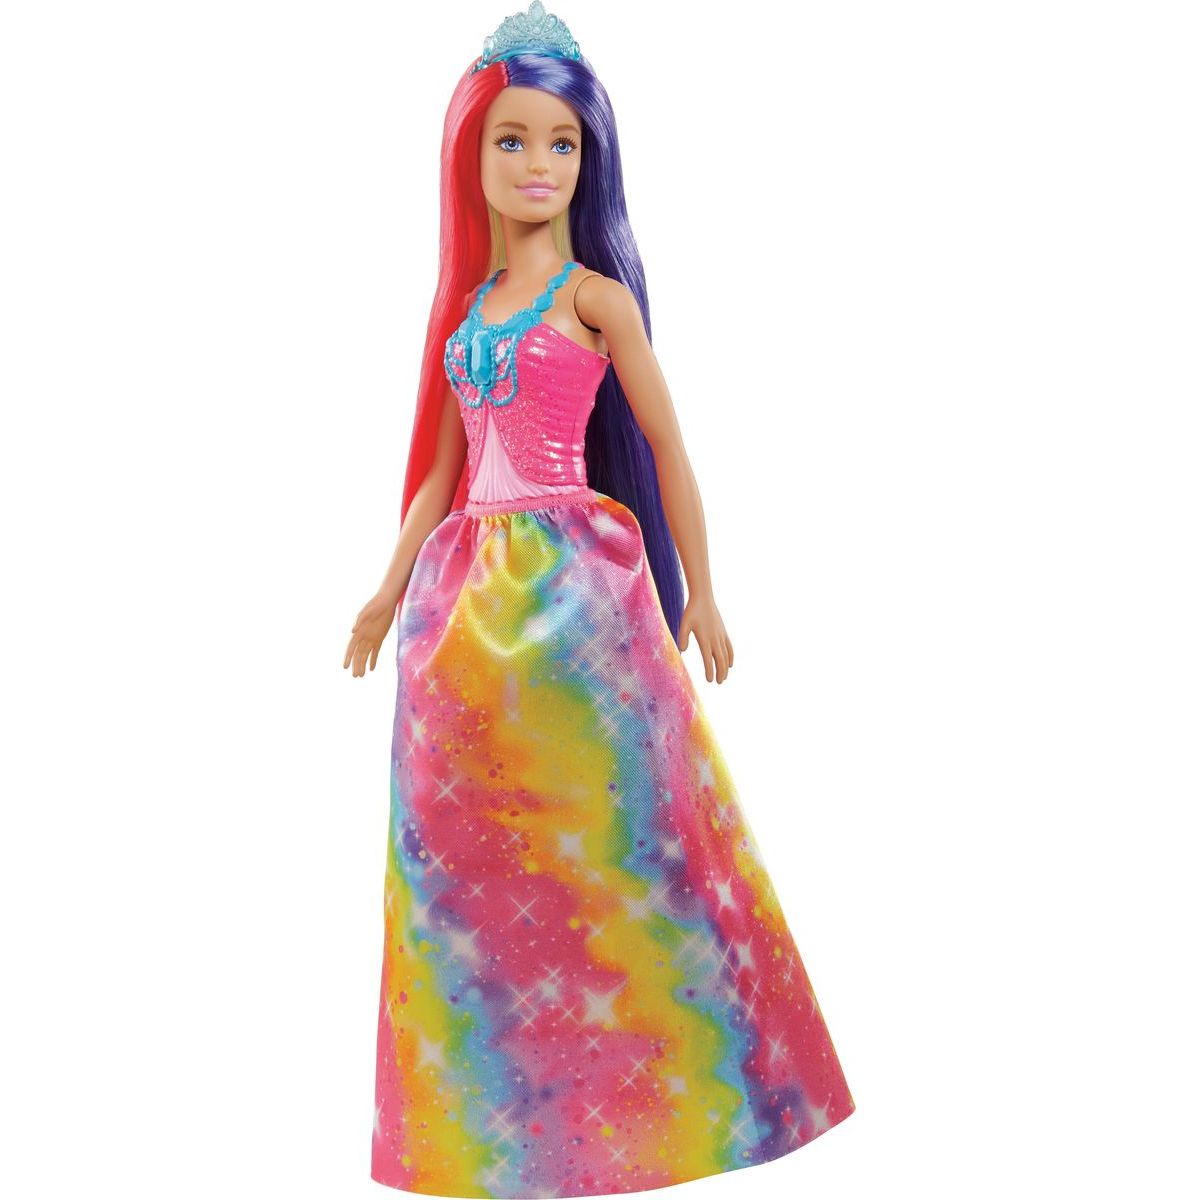 Mattel Barbie princezna s dlouhými vlasy